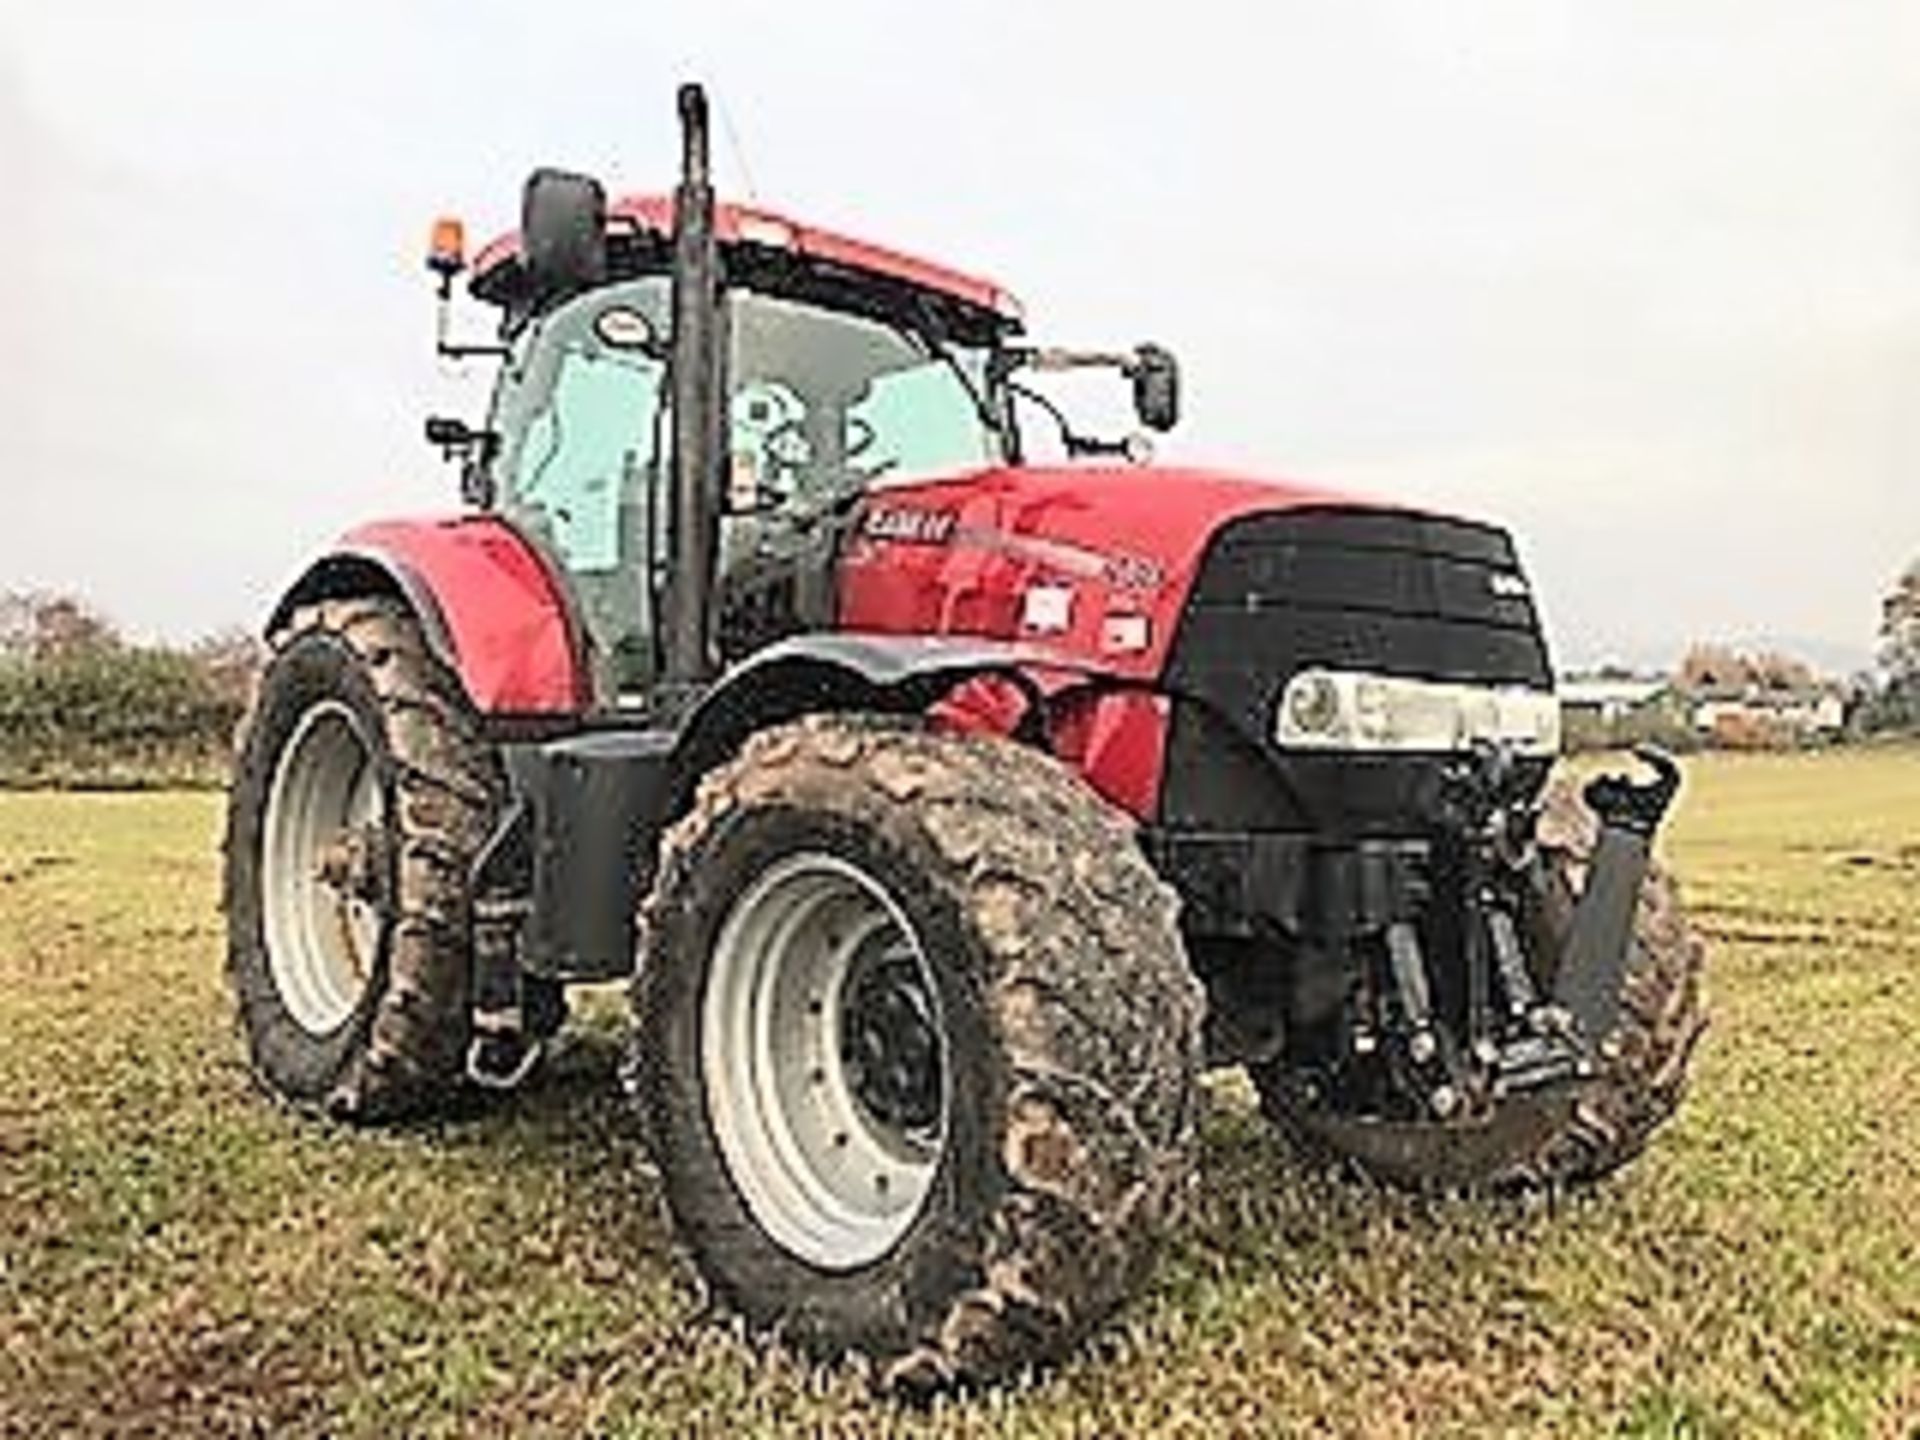 2013 CASE 230 PUMA 4ws tractor. Reg - FJ13HJD. 2742hrs (not verified) - Bild 7 aus 8